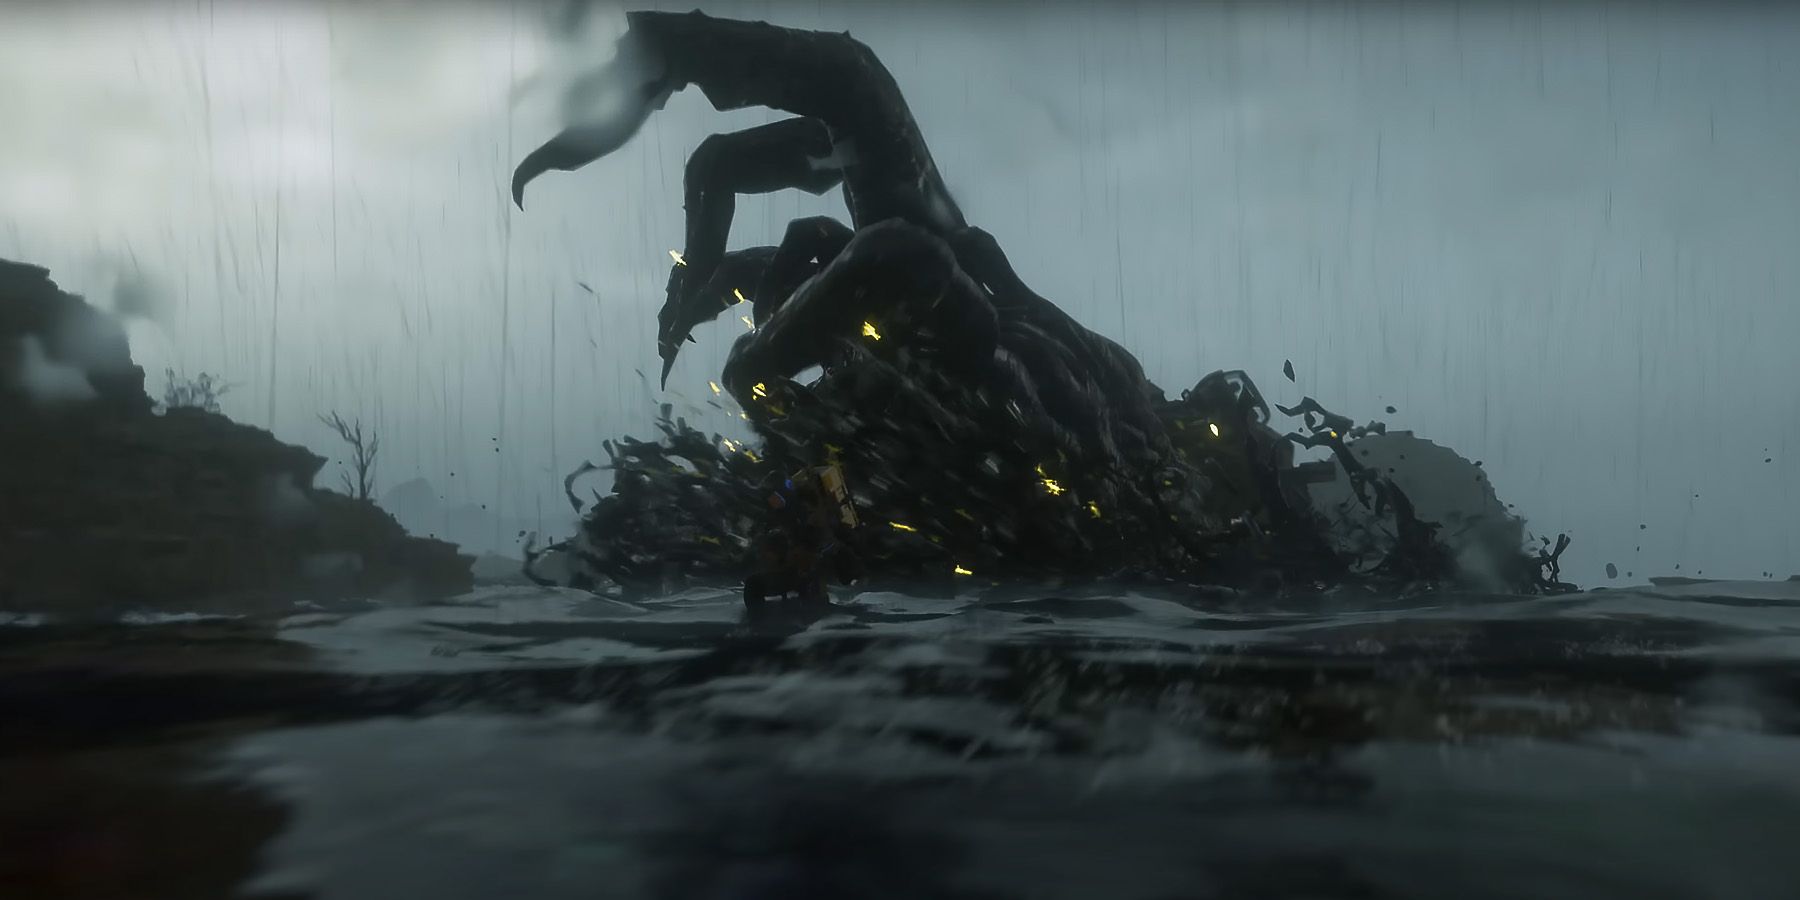 Captura de pantalla de un gigantesco BT con forma de mano de cangrejo en Death Stranding 2